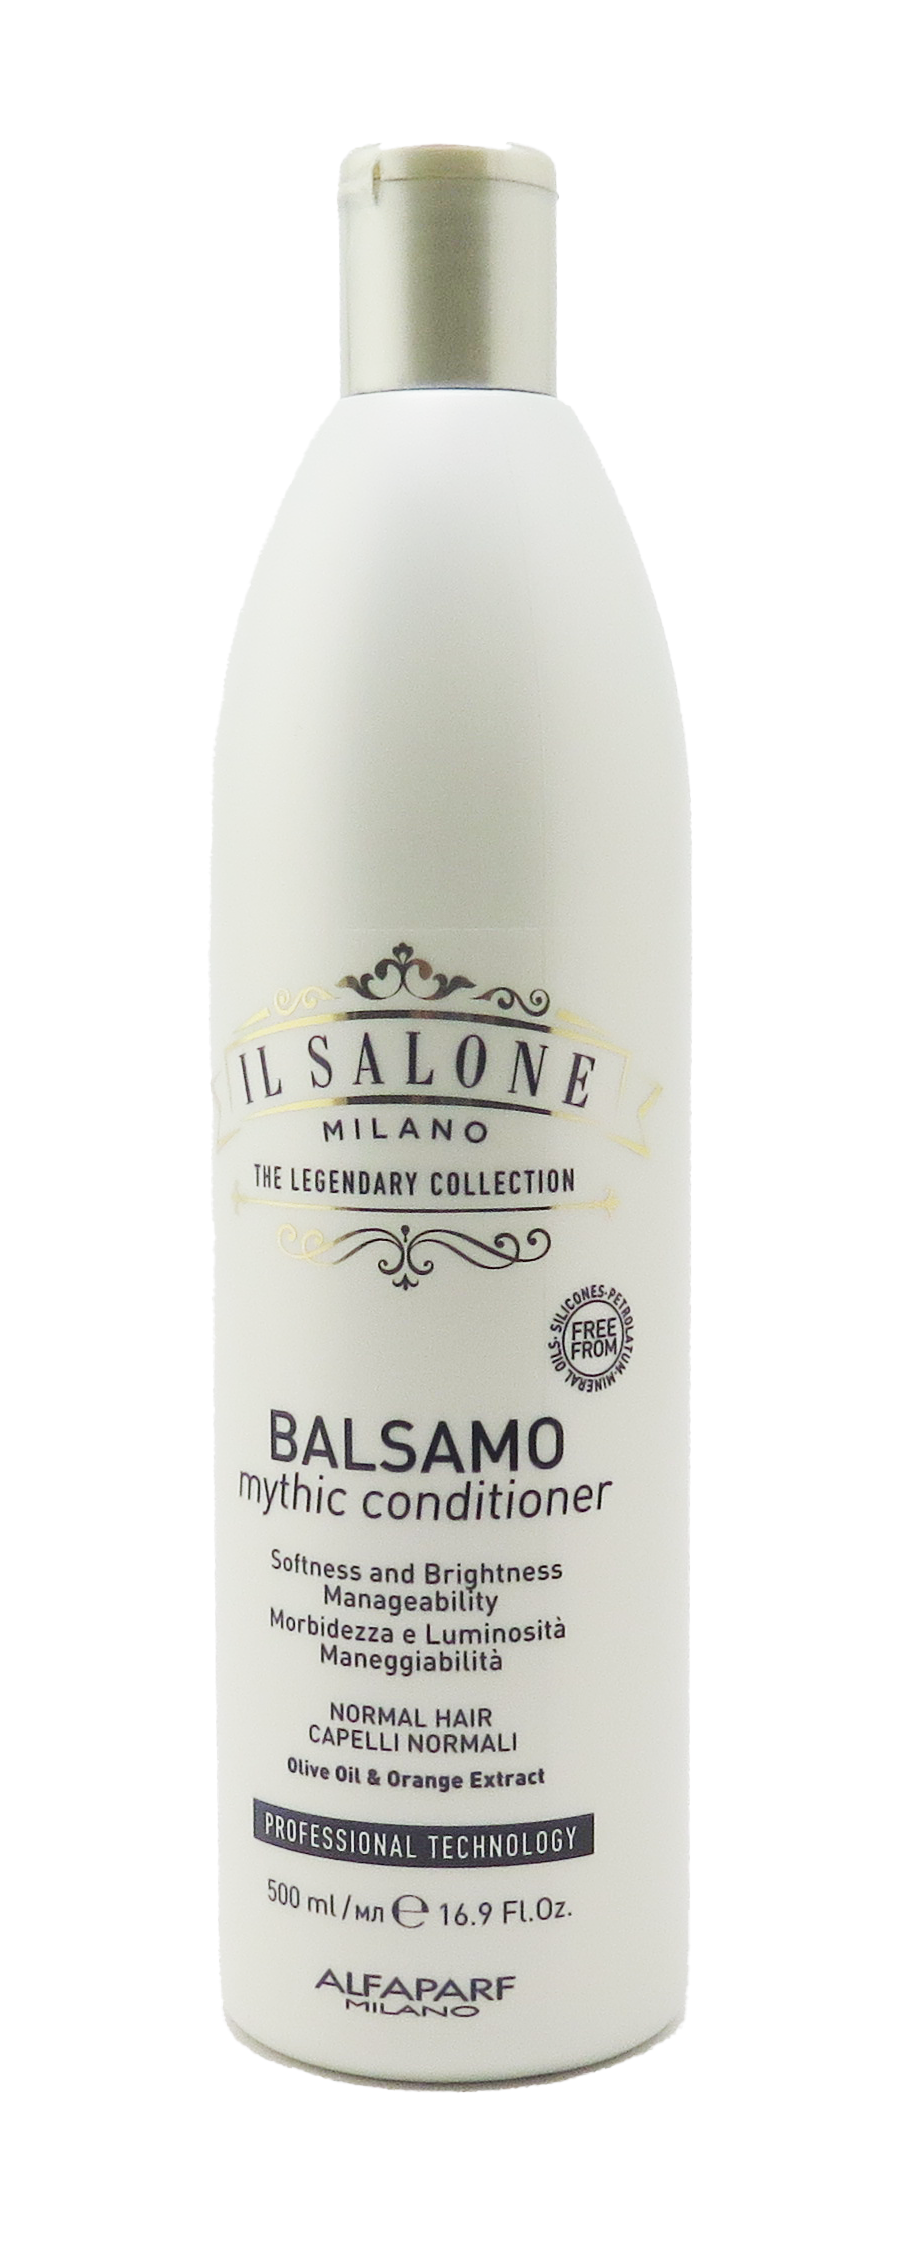 IL Salone Milano Mythic Conditioner for Normal Hair 500ml/16.9 fl oz